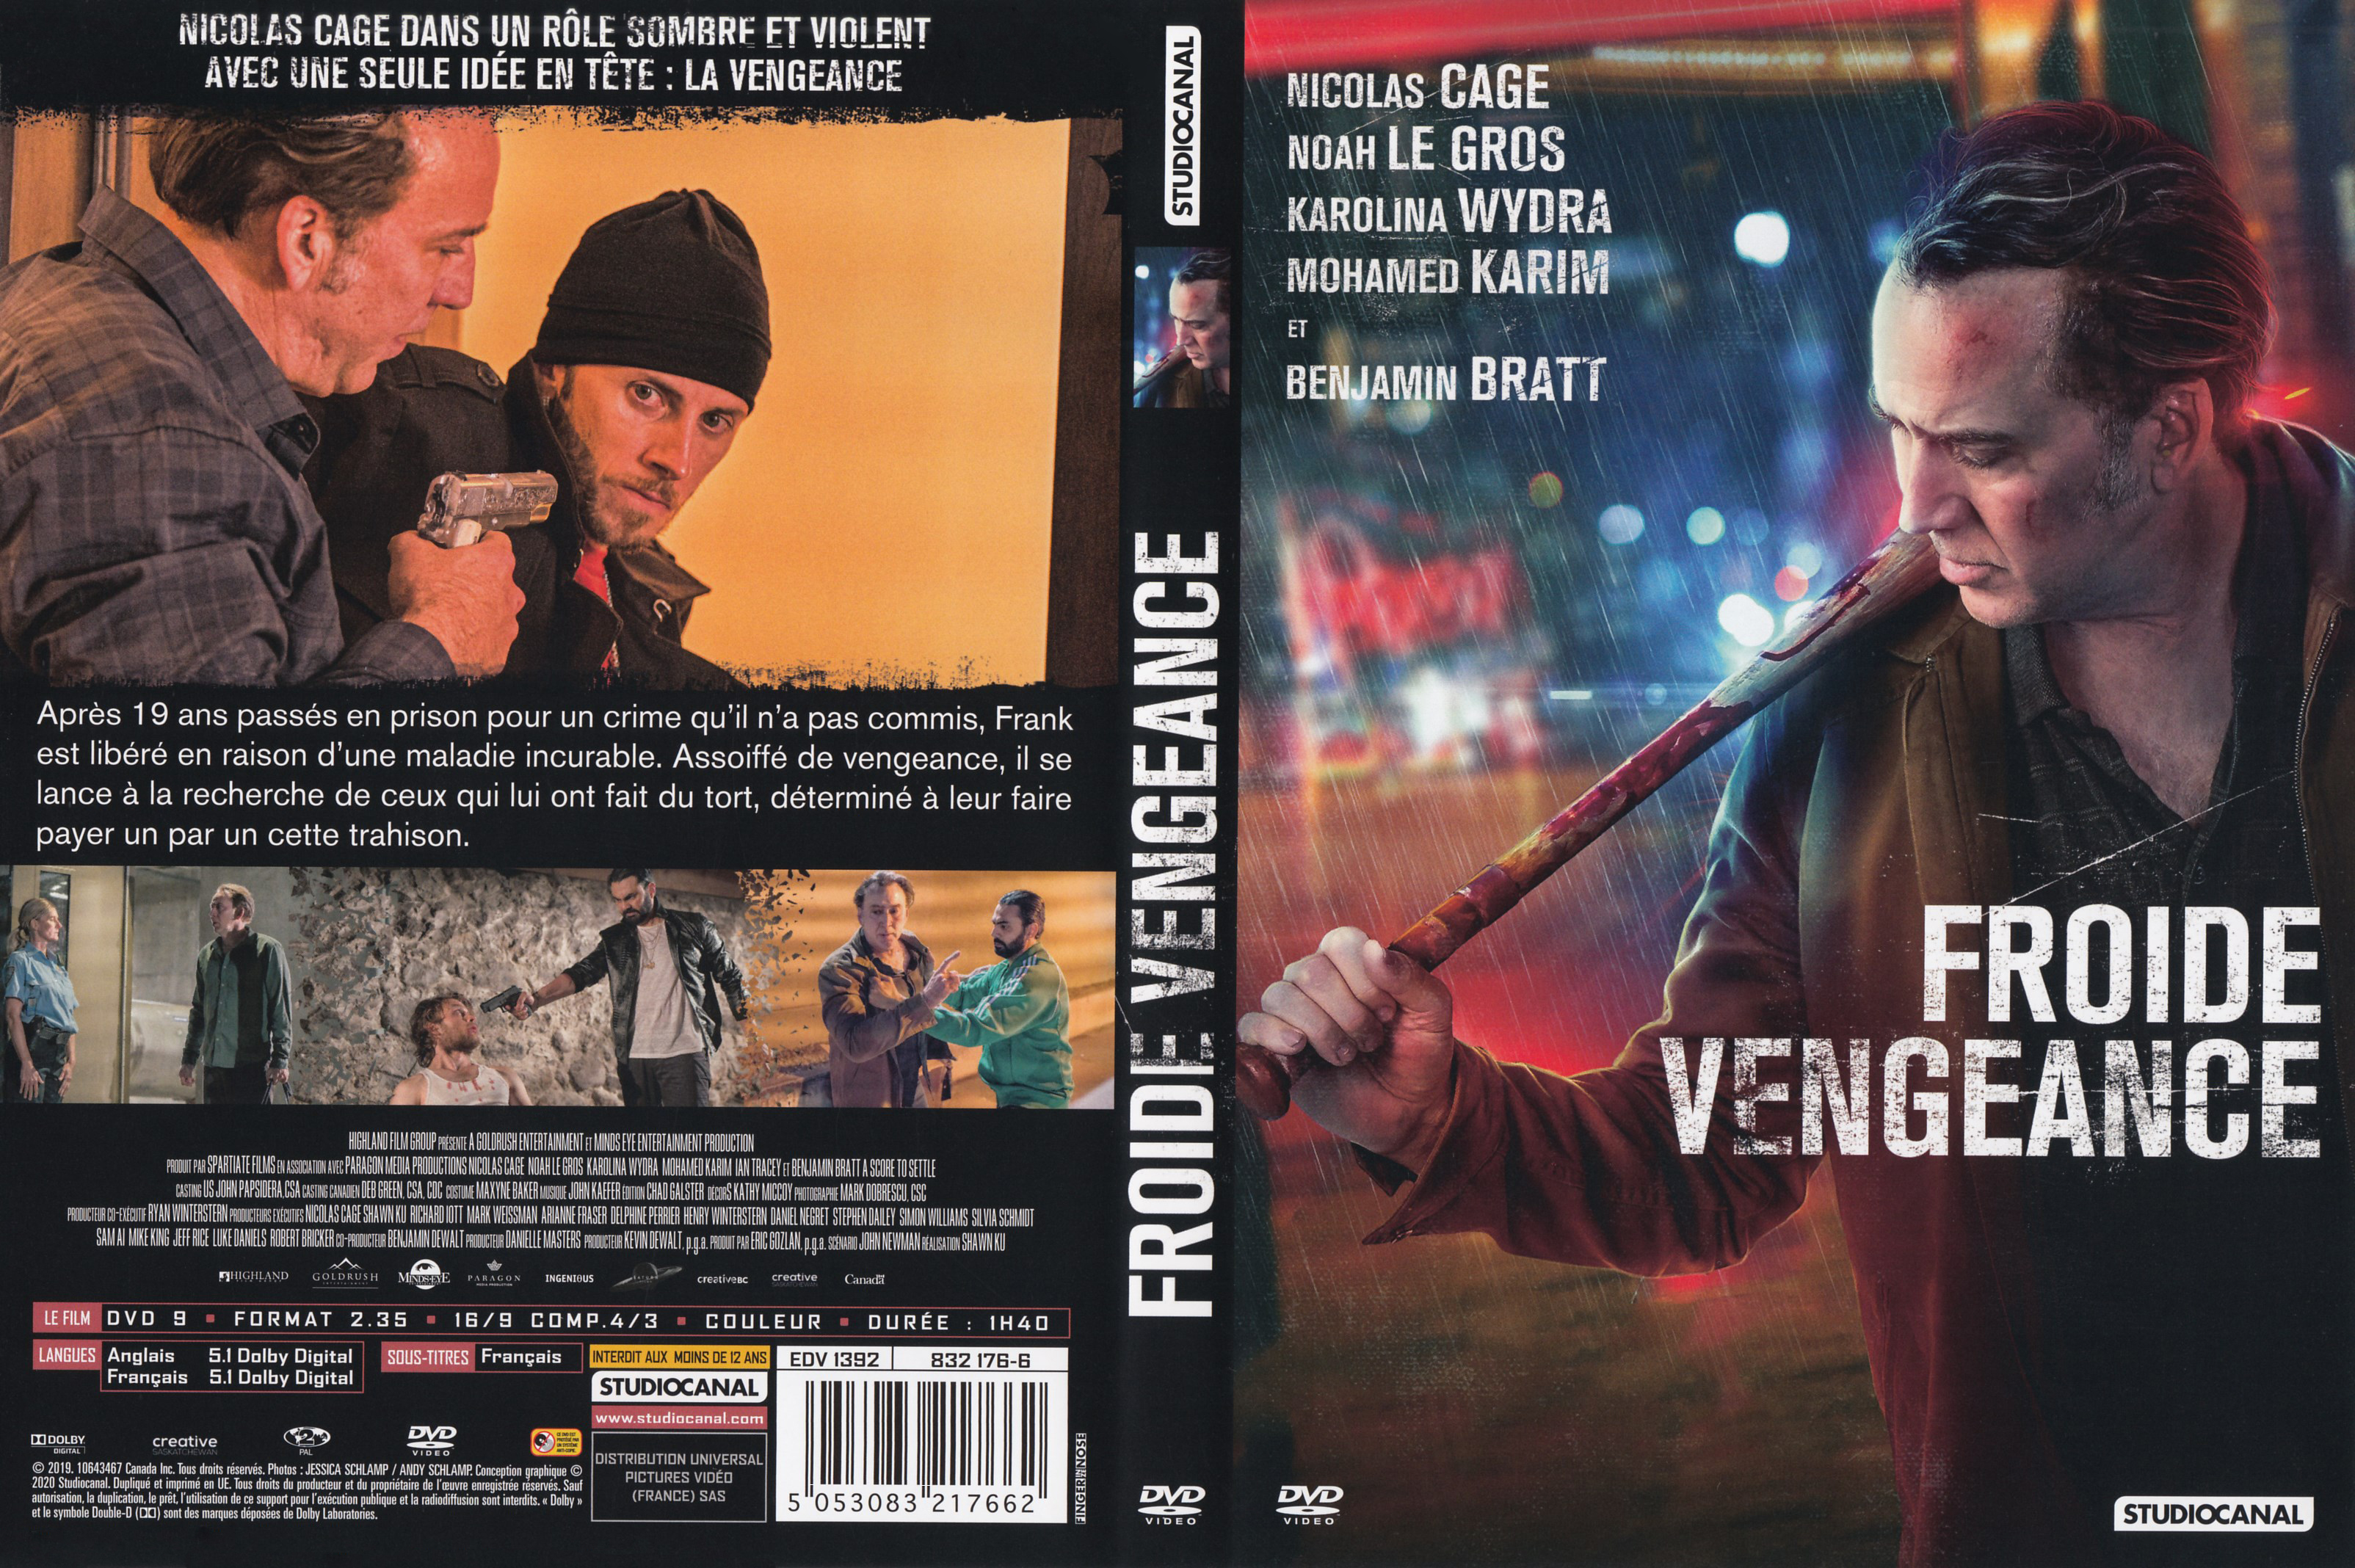 Jaquette DVD Froide vengeance